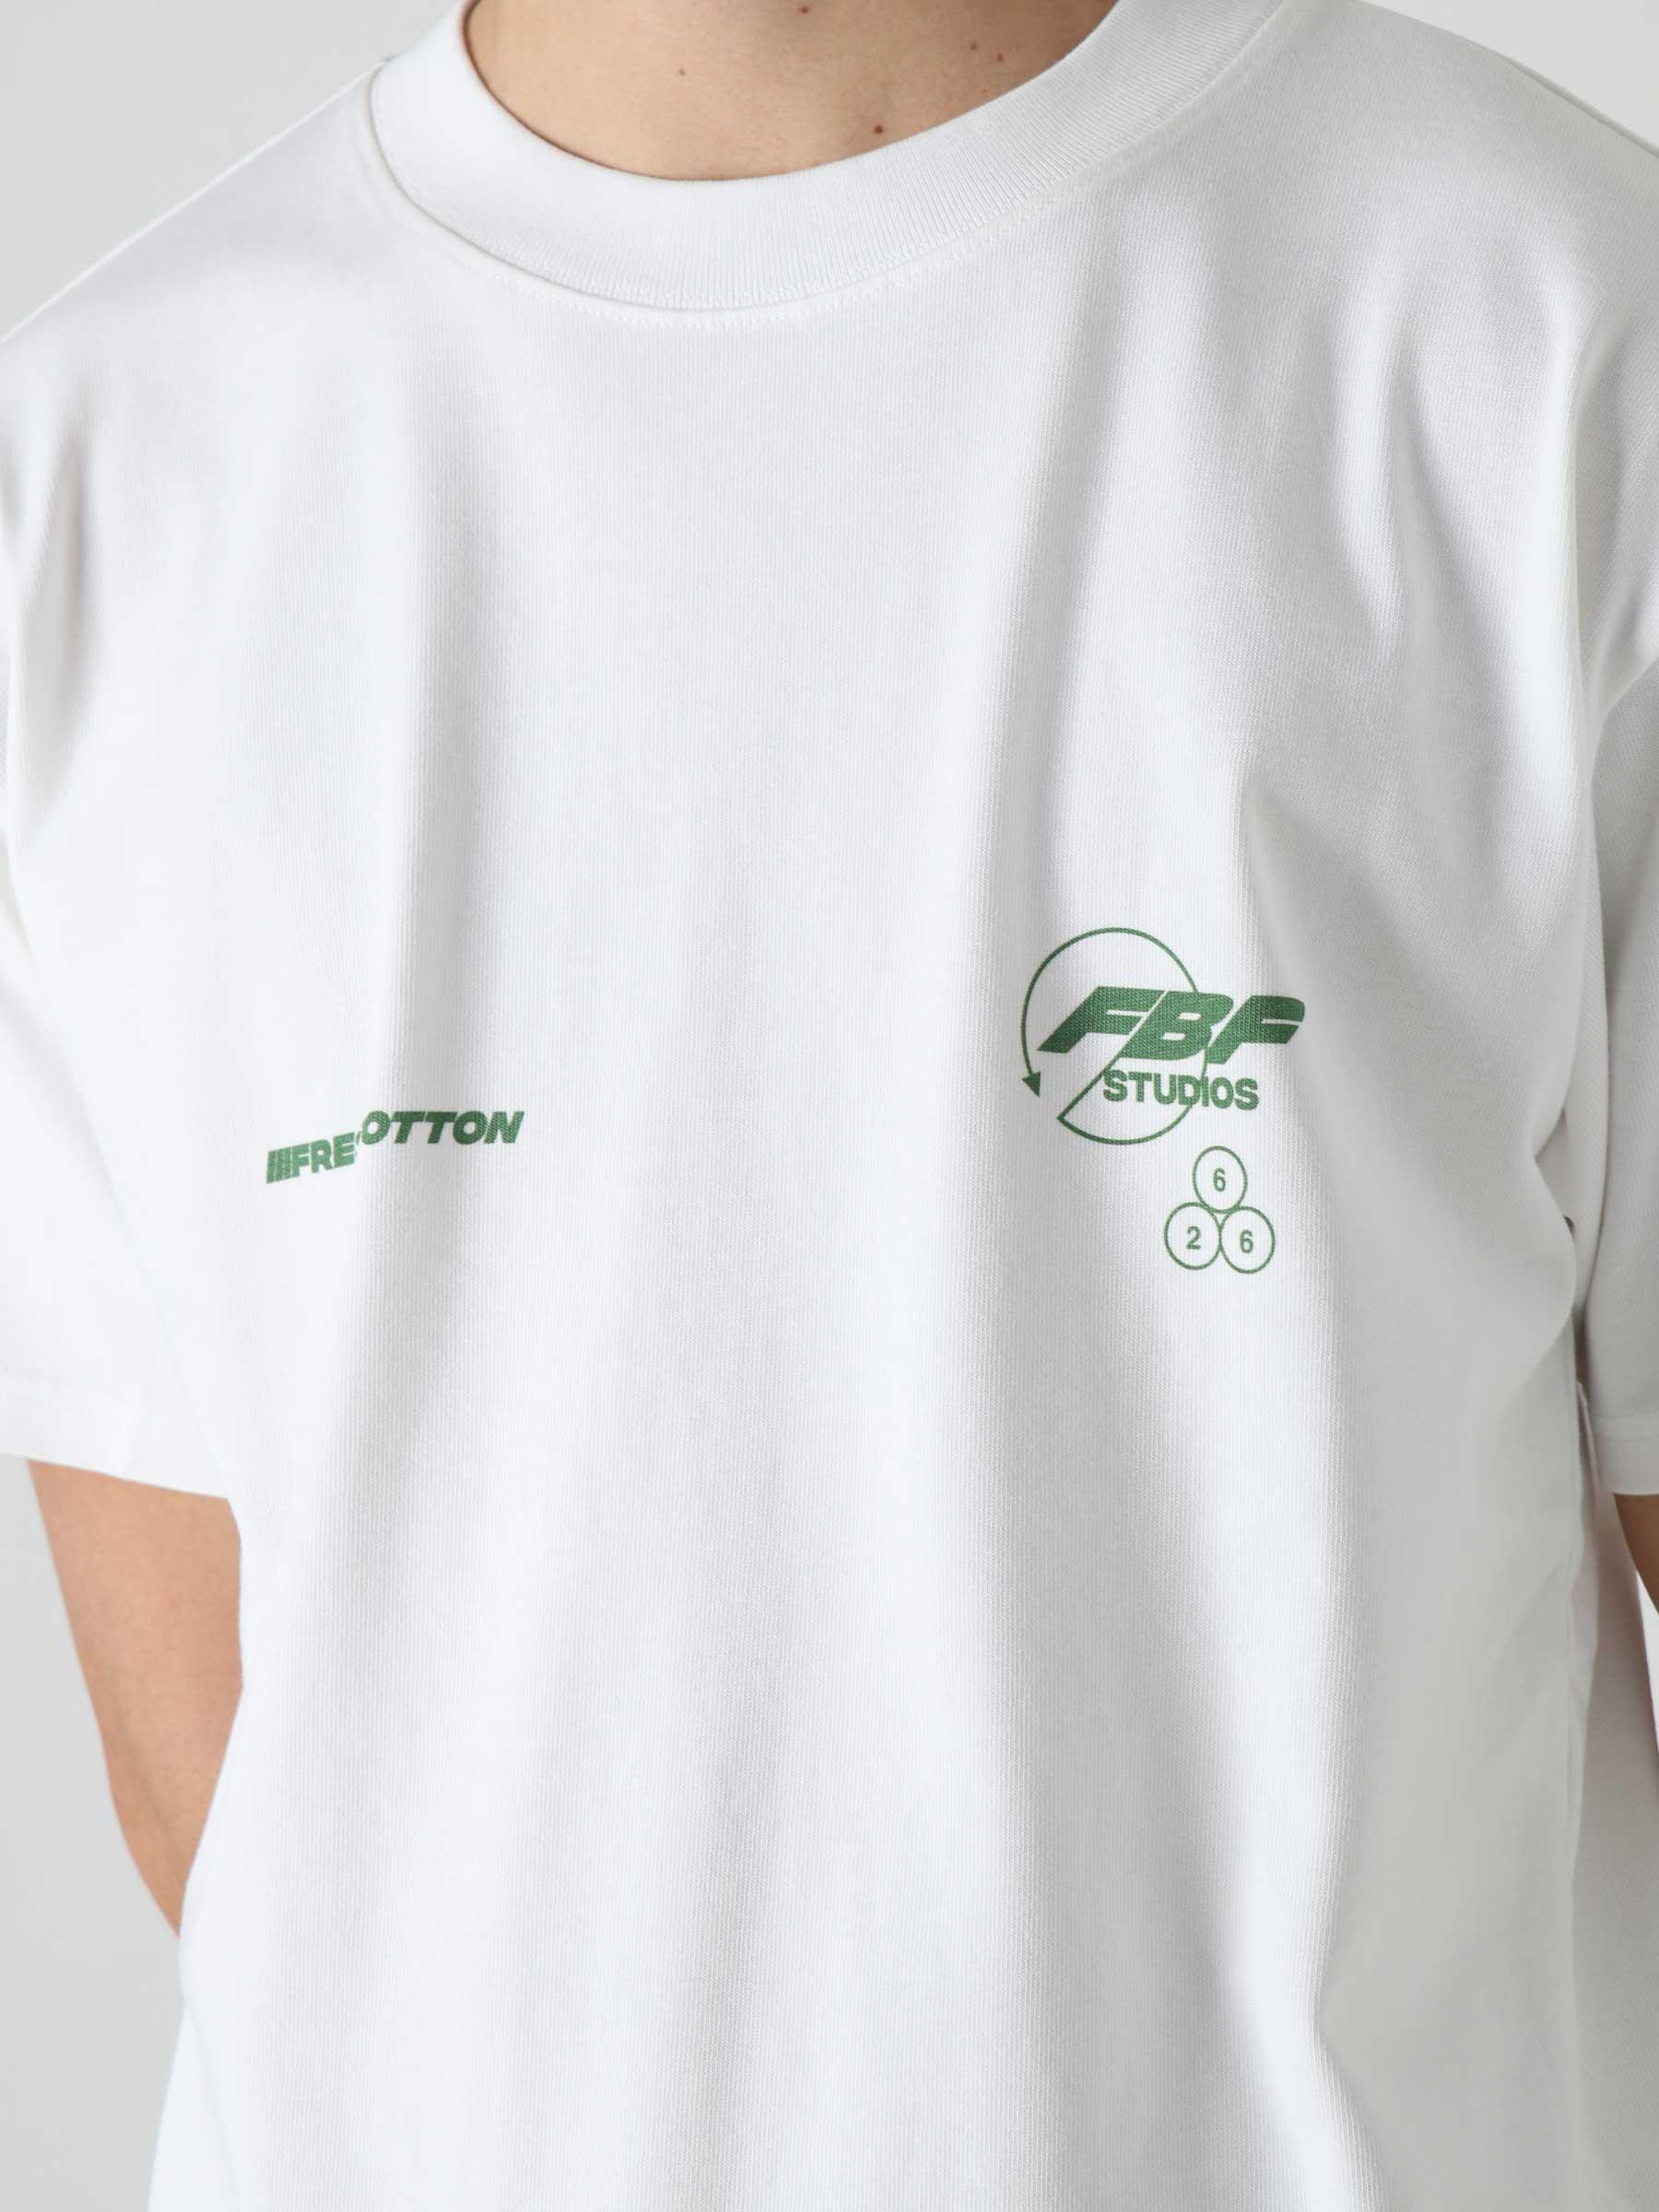 FBF Family T-Shirt White Green